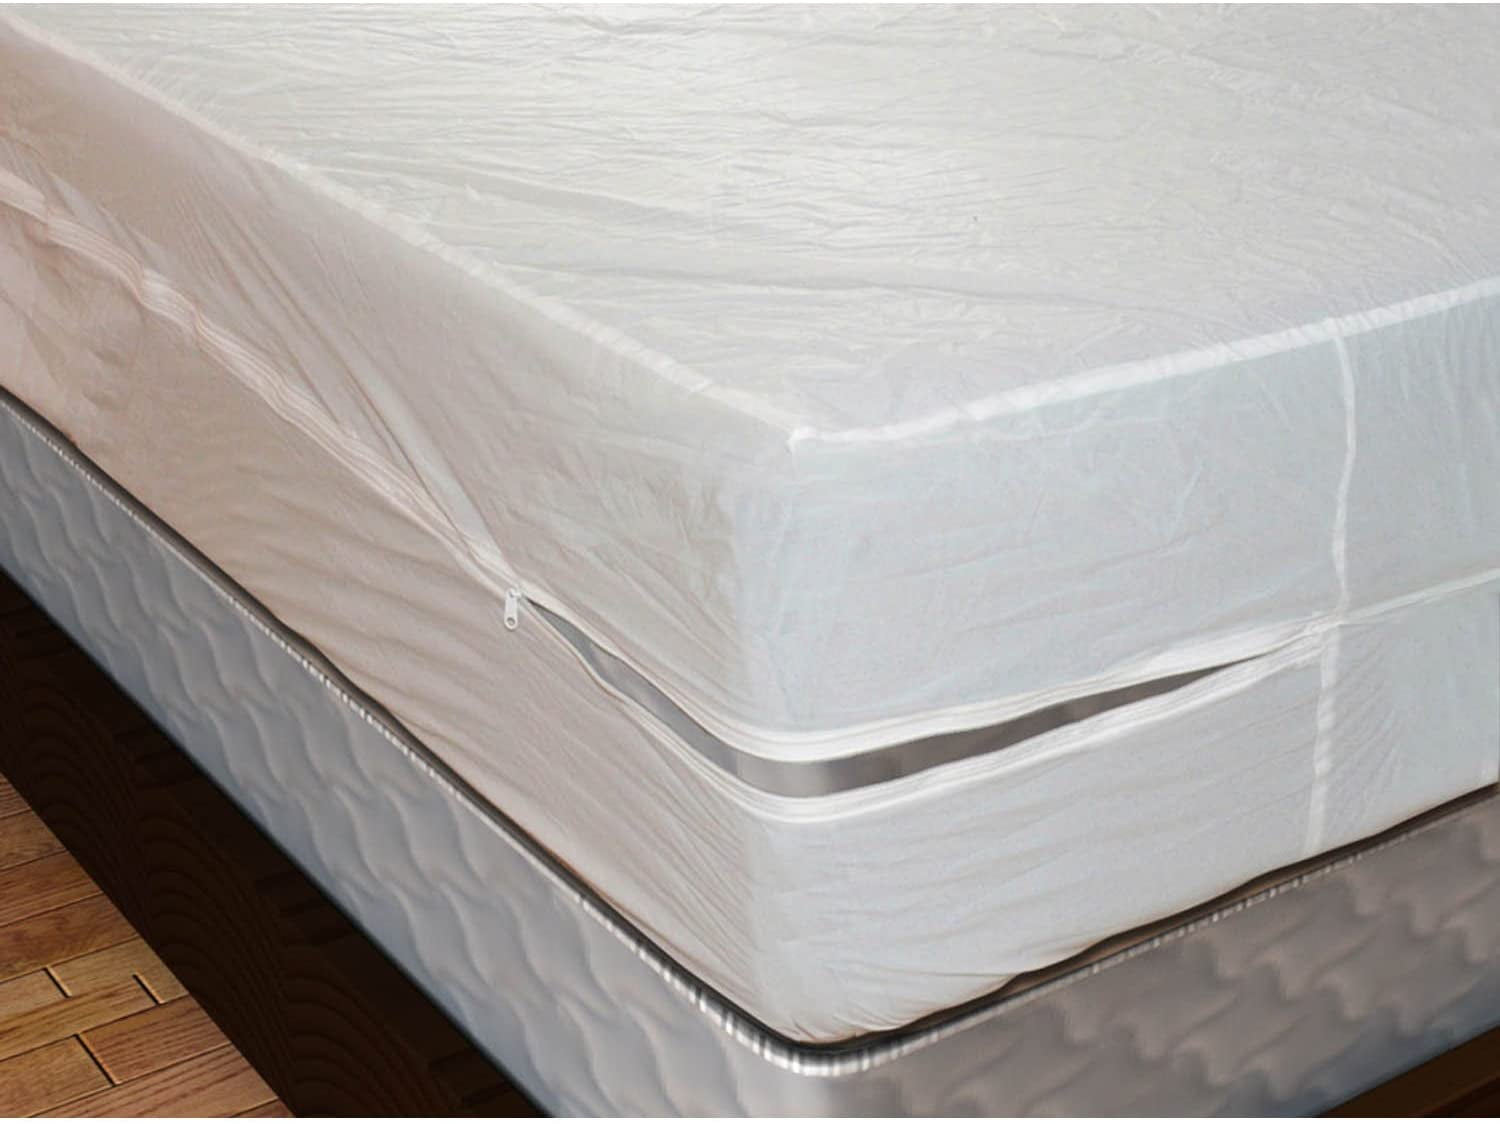 wash plastic mattress cover